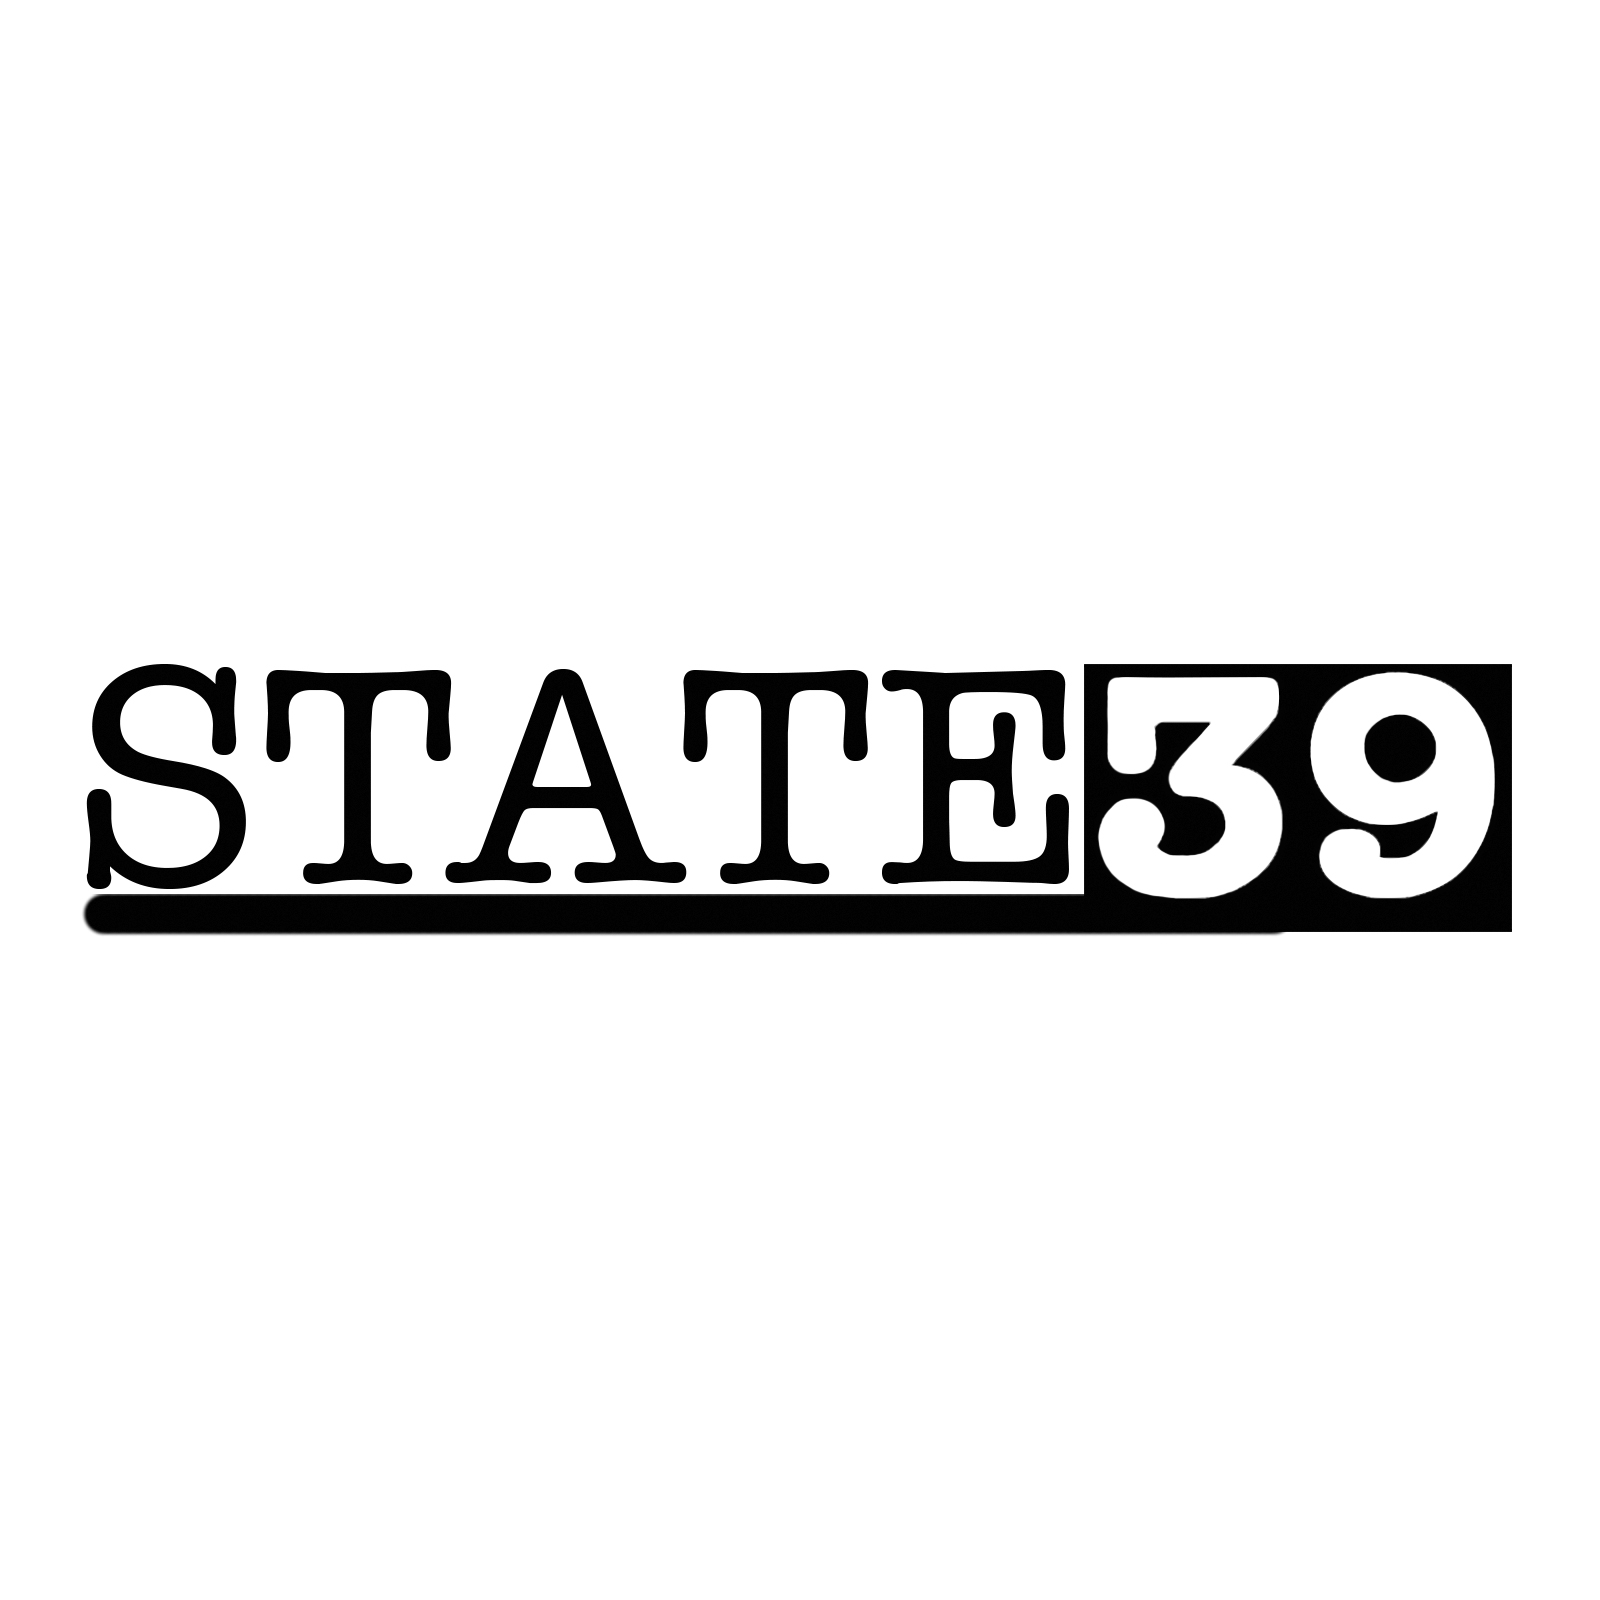 DANIEL ROYSE: STATE39 LOGO